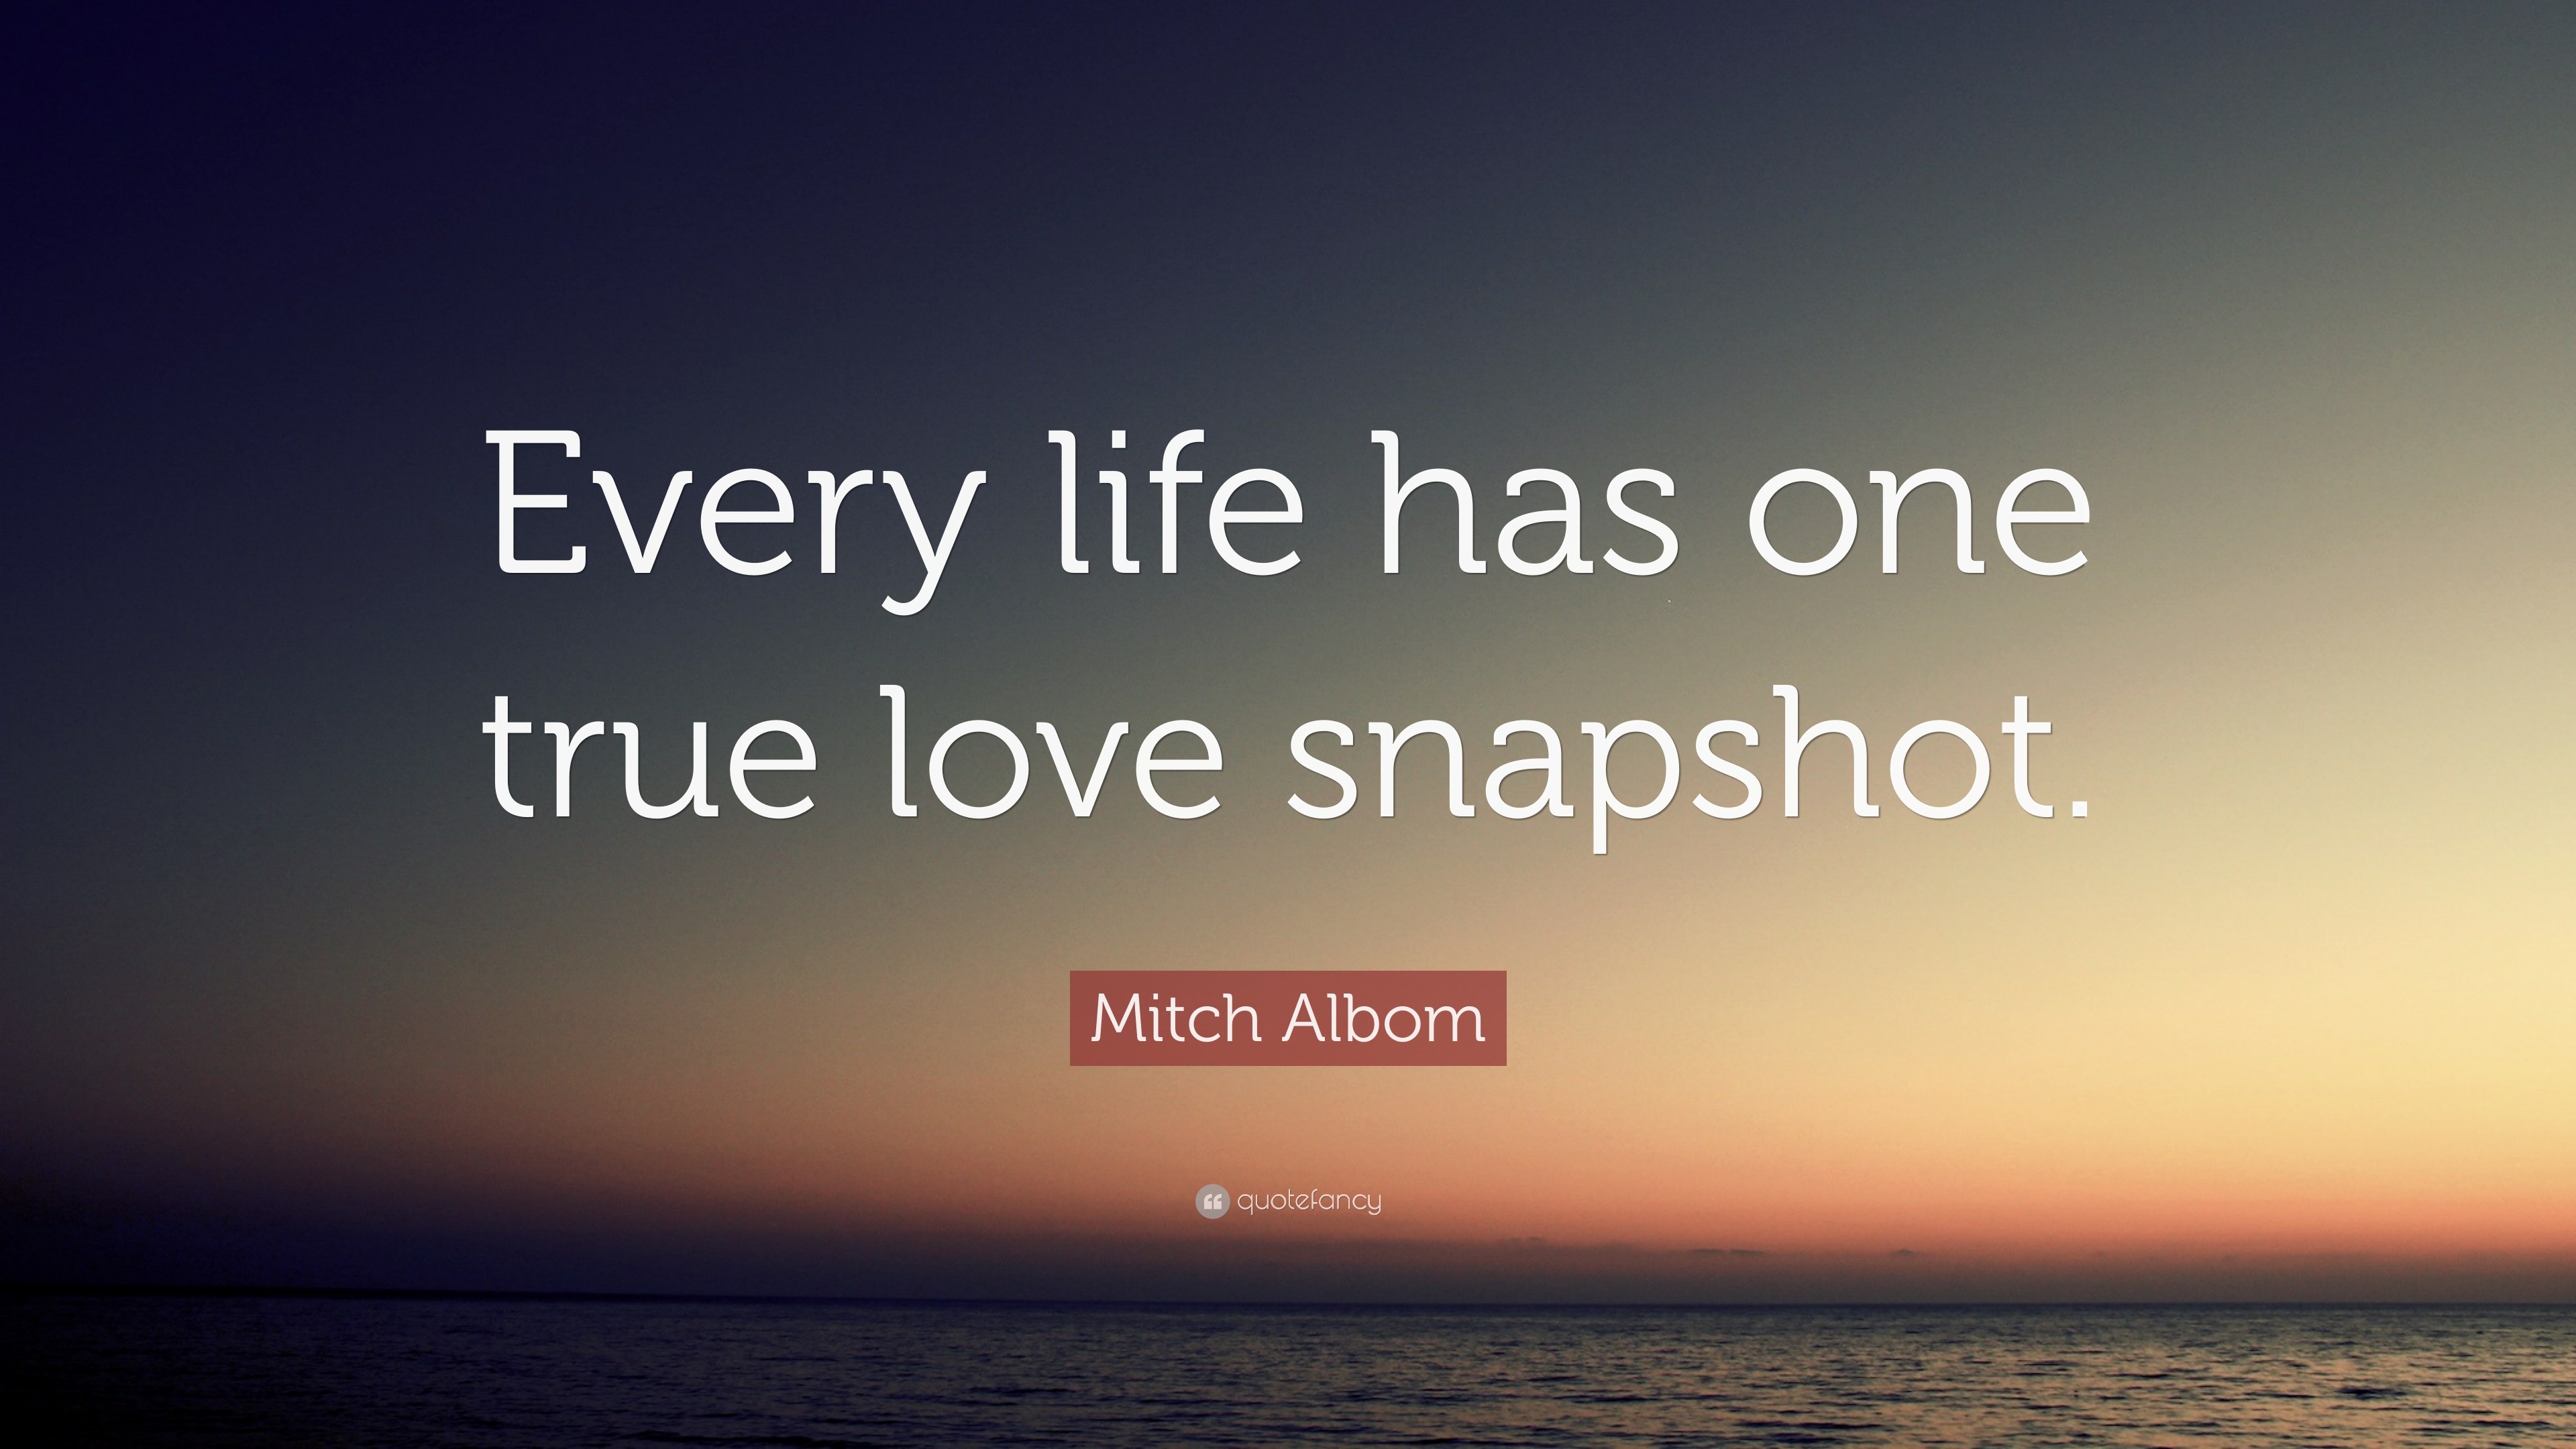 Mitch Albom Quote “Every life has one true love snapshot ”